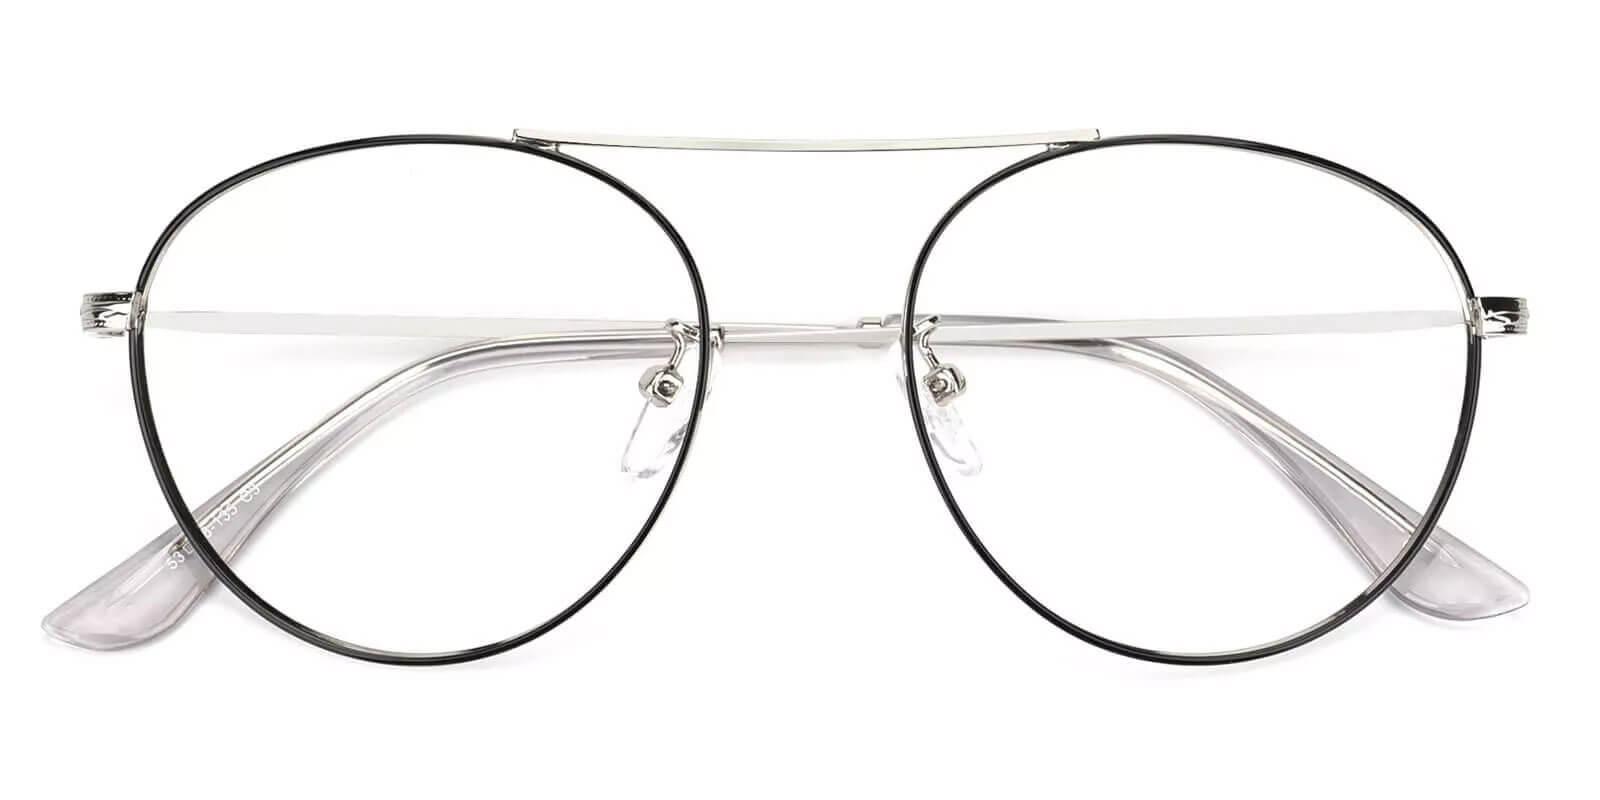 Chloe Silver Metal Eyeglasses , NosePads Frames from ABBE Glasses